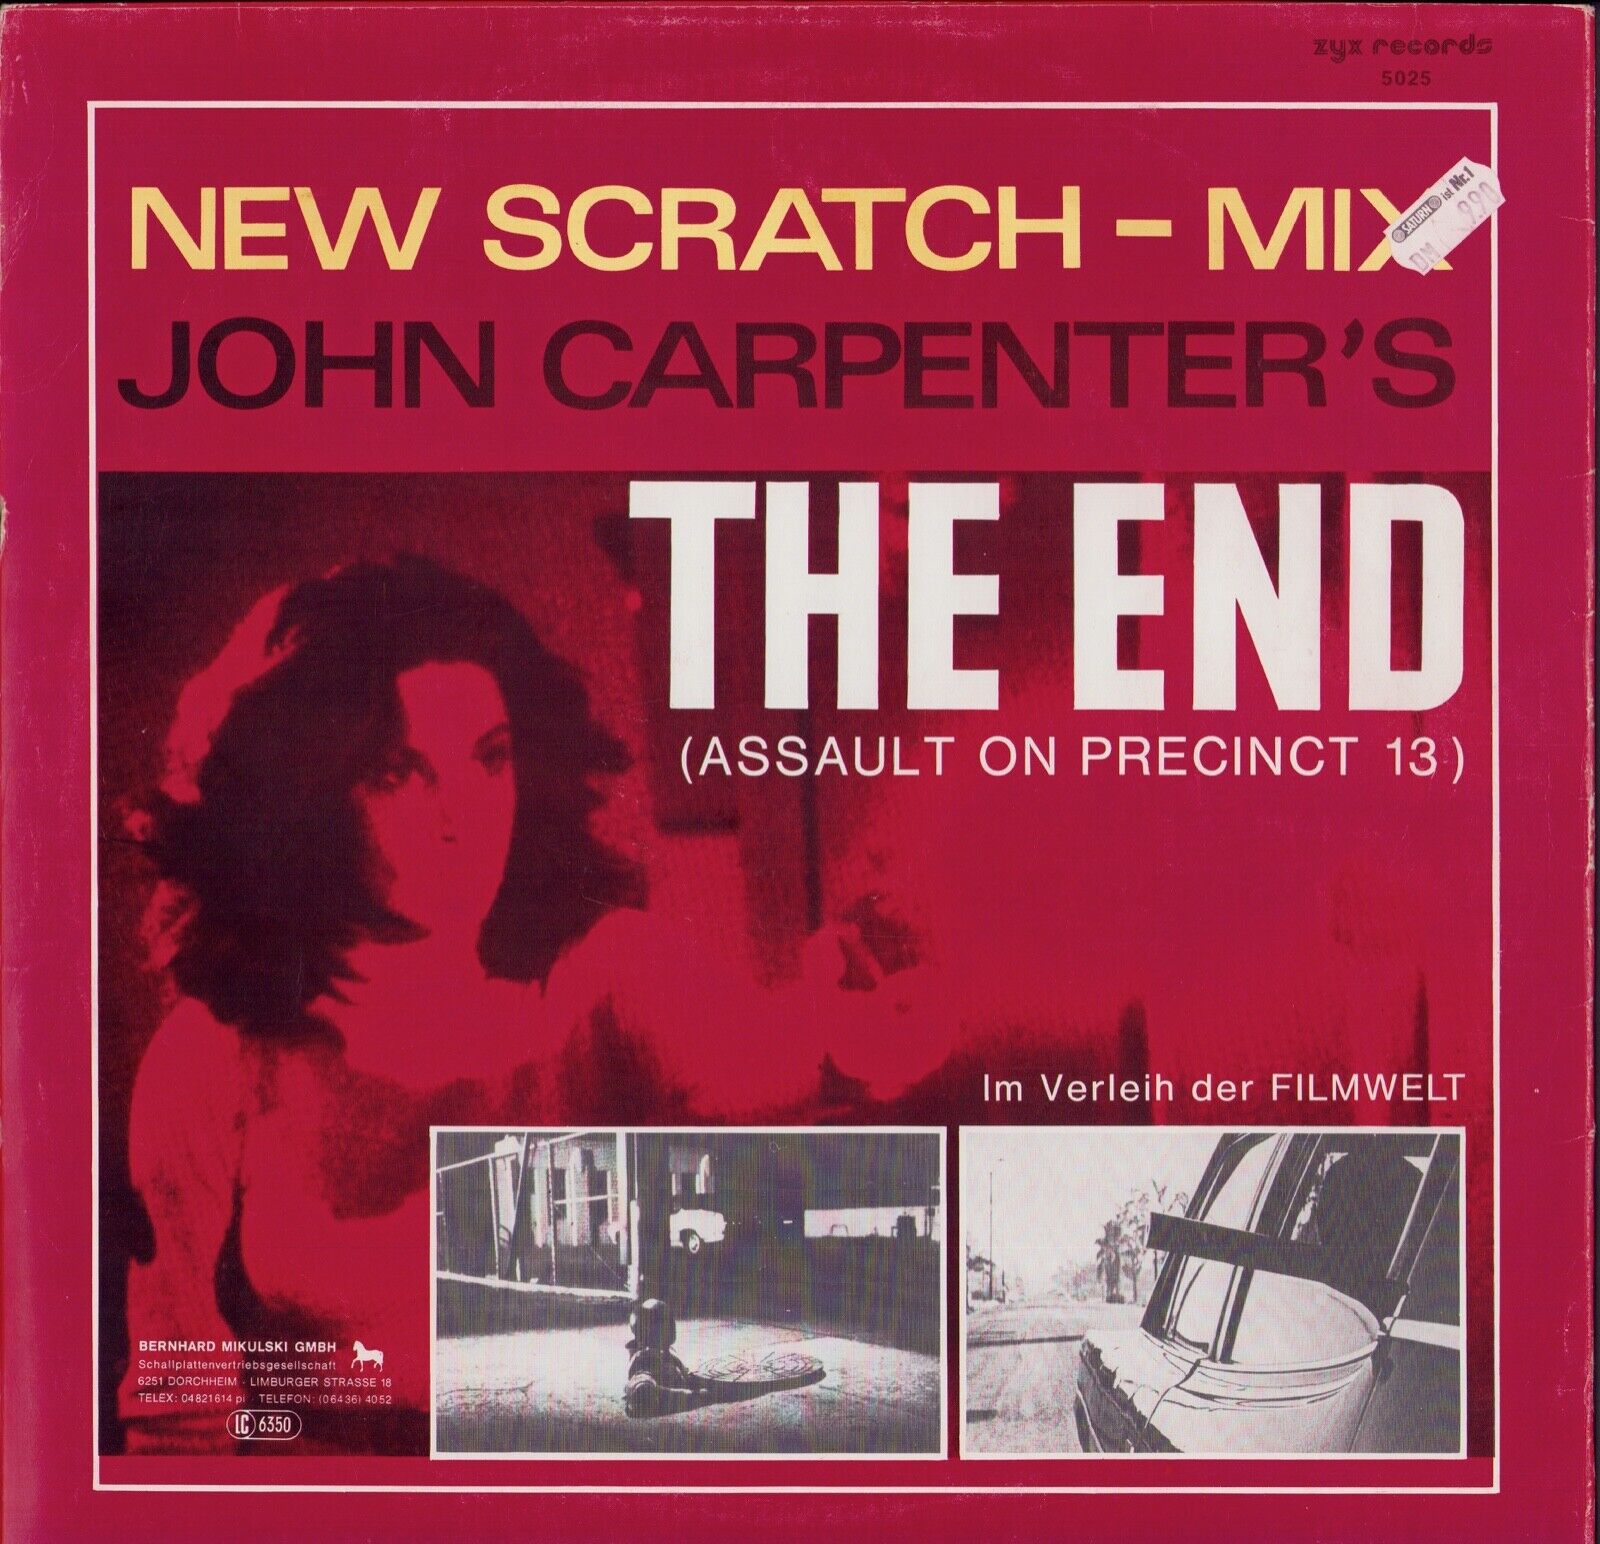 The Splash Band ‎- The End New Scratch-Mix Vinyl 12"